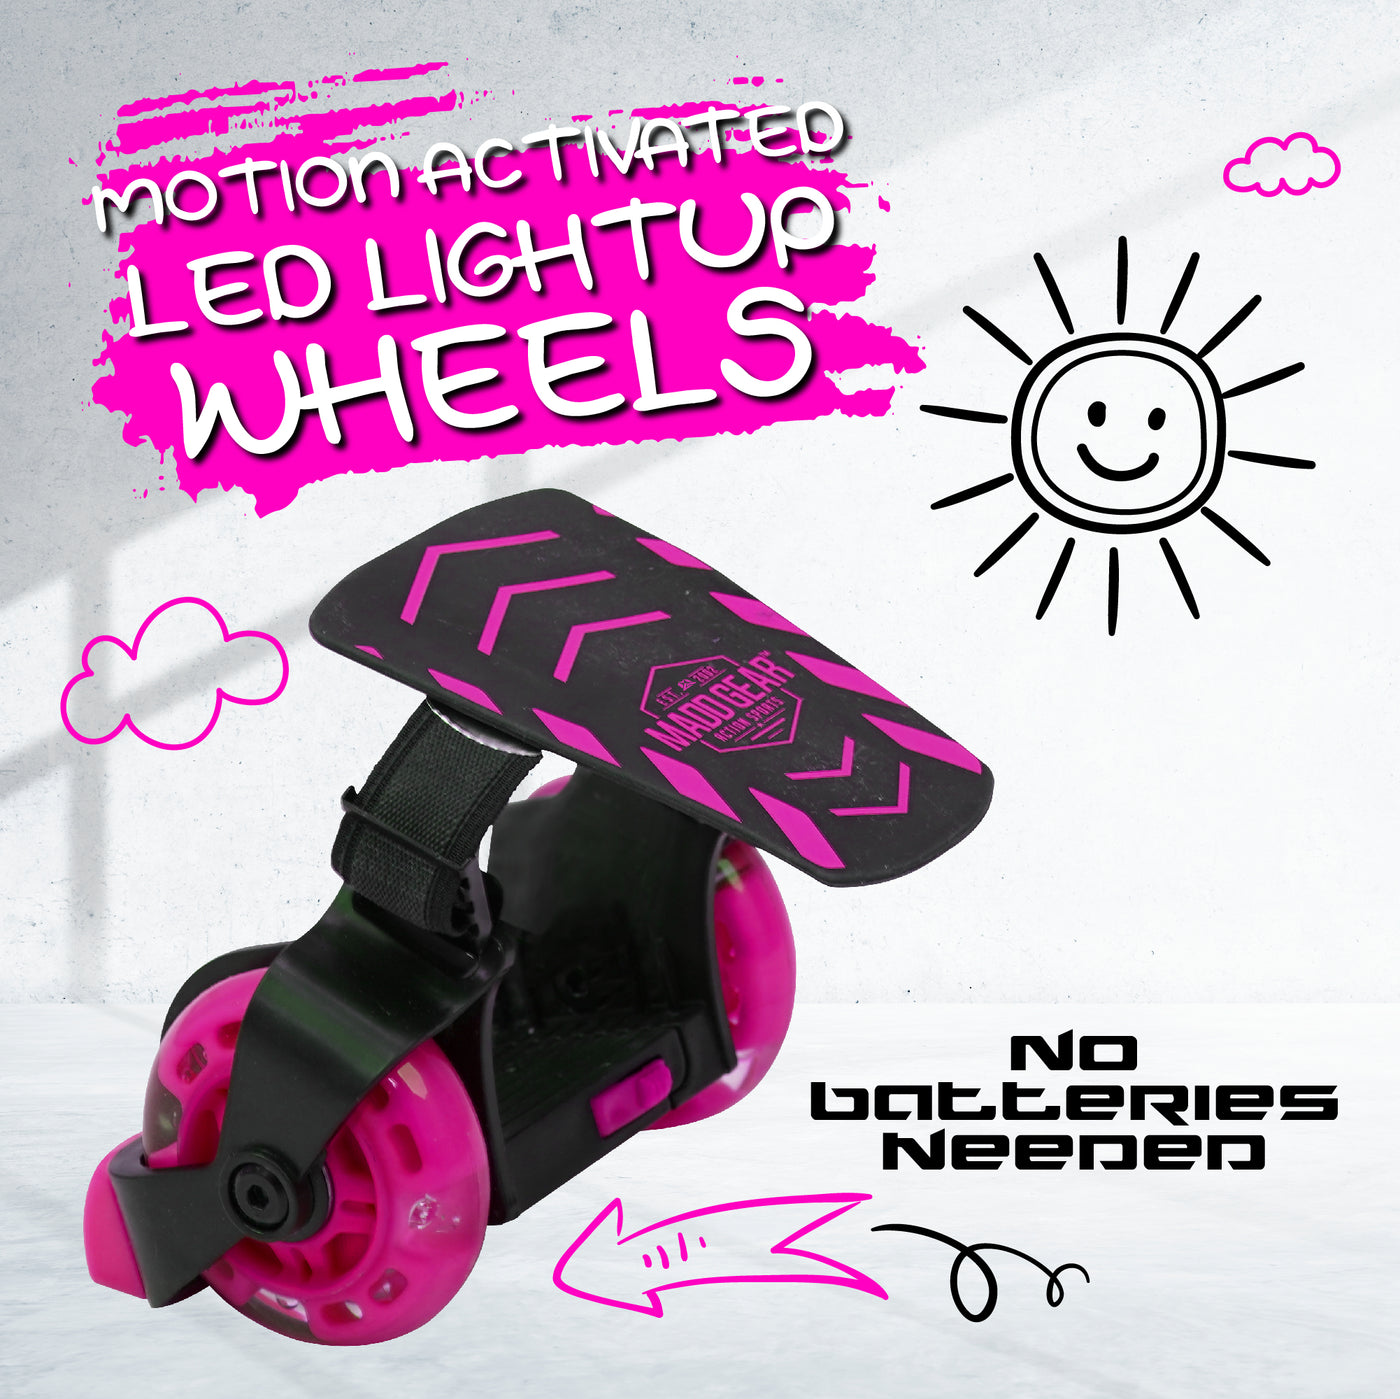 Madd Gear Light-Up Rollers Heel Skates LED Wheels Adjustable to